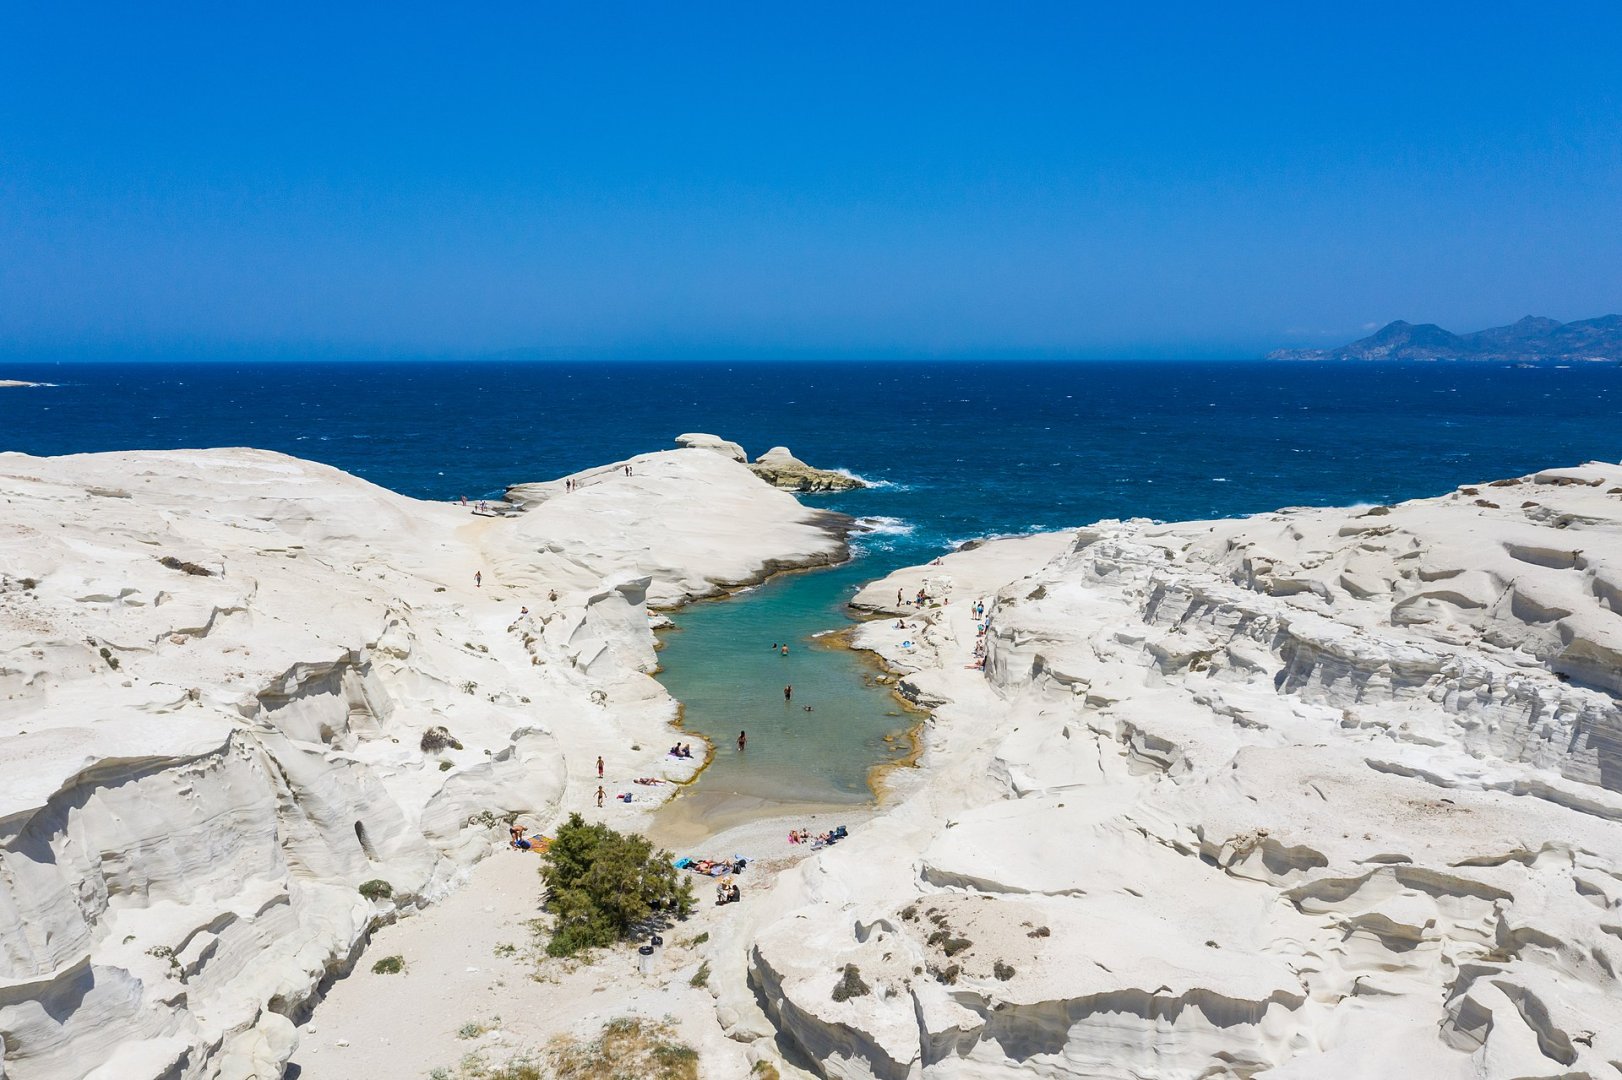 Sarakiniko_Beach_on_Milos_Island,_Greece_with_a_view_of_the_Aegean_Sea.jpg